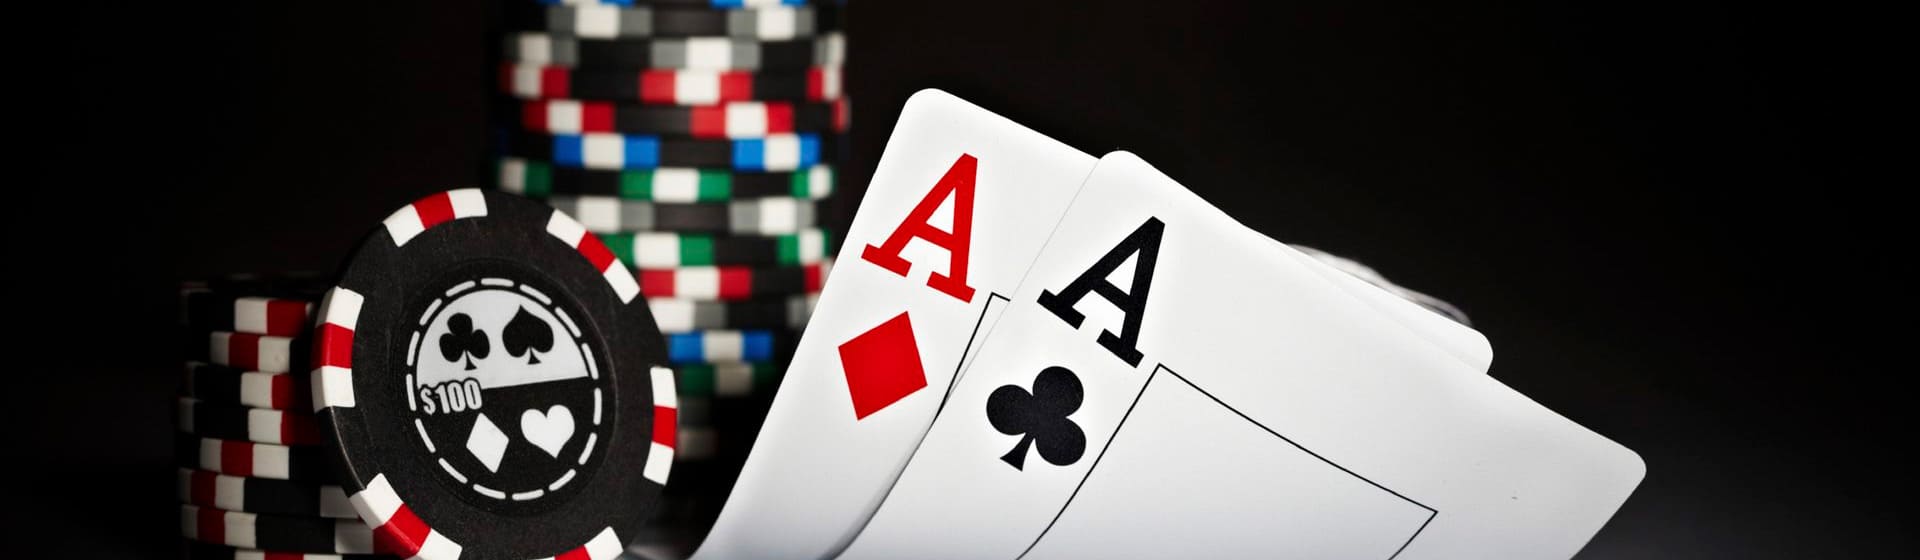 Poker - Мерч и одежда с атрибутикой